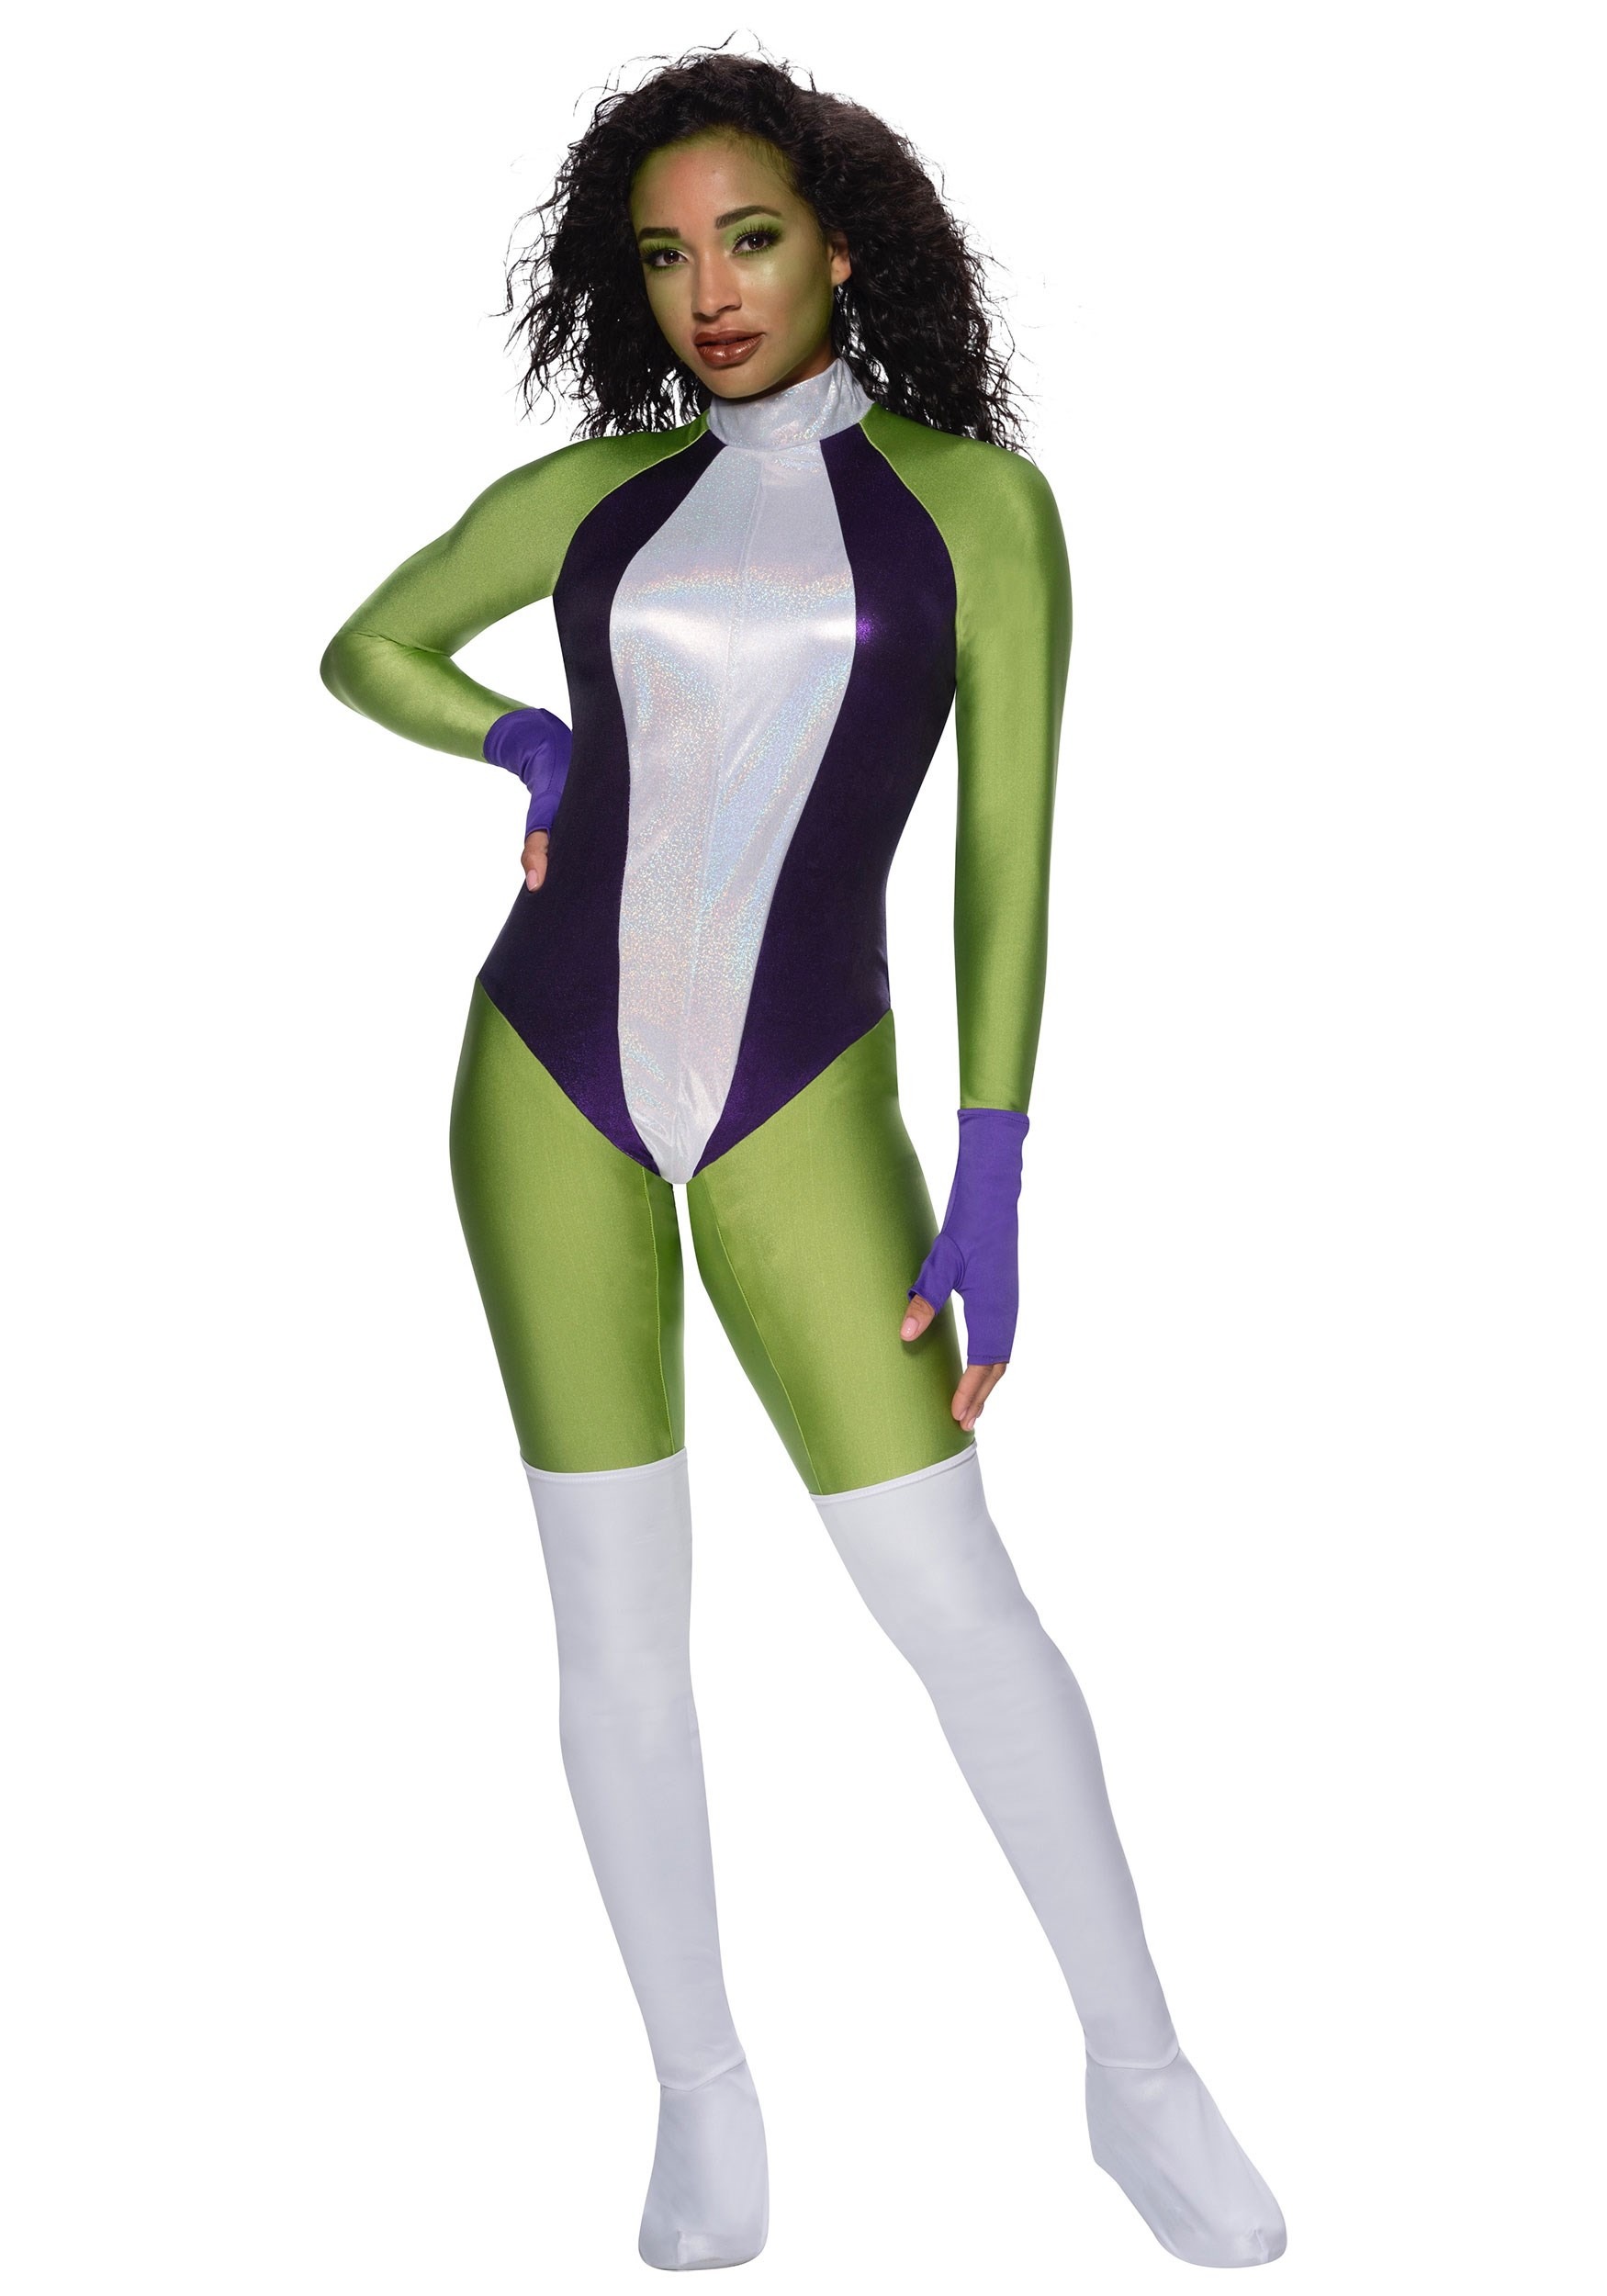 She hulk body suit